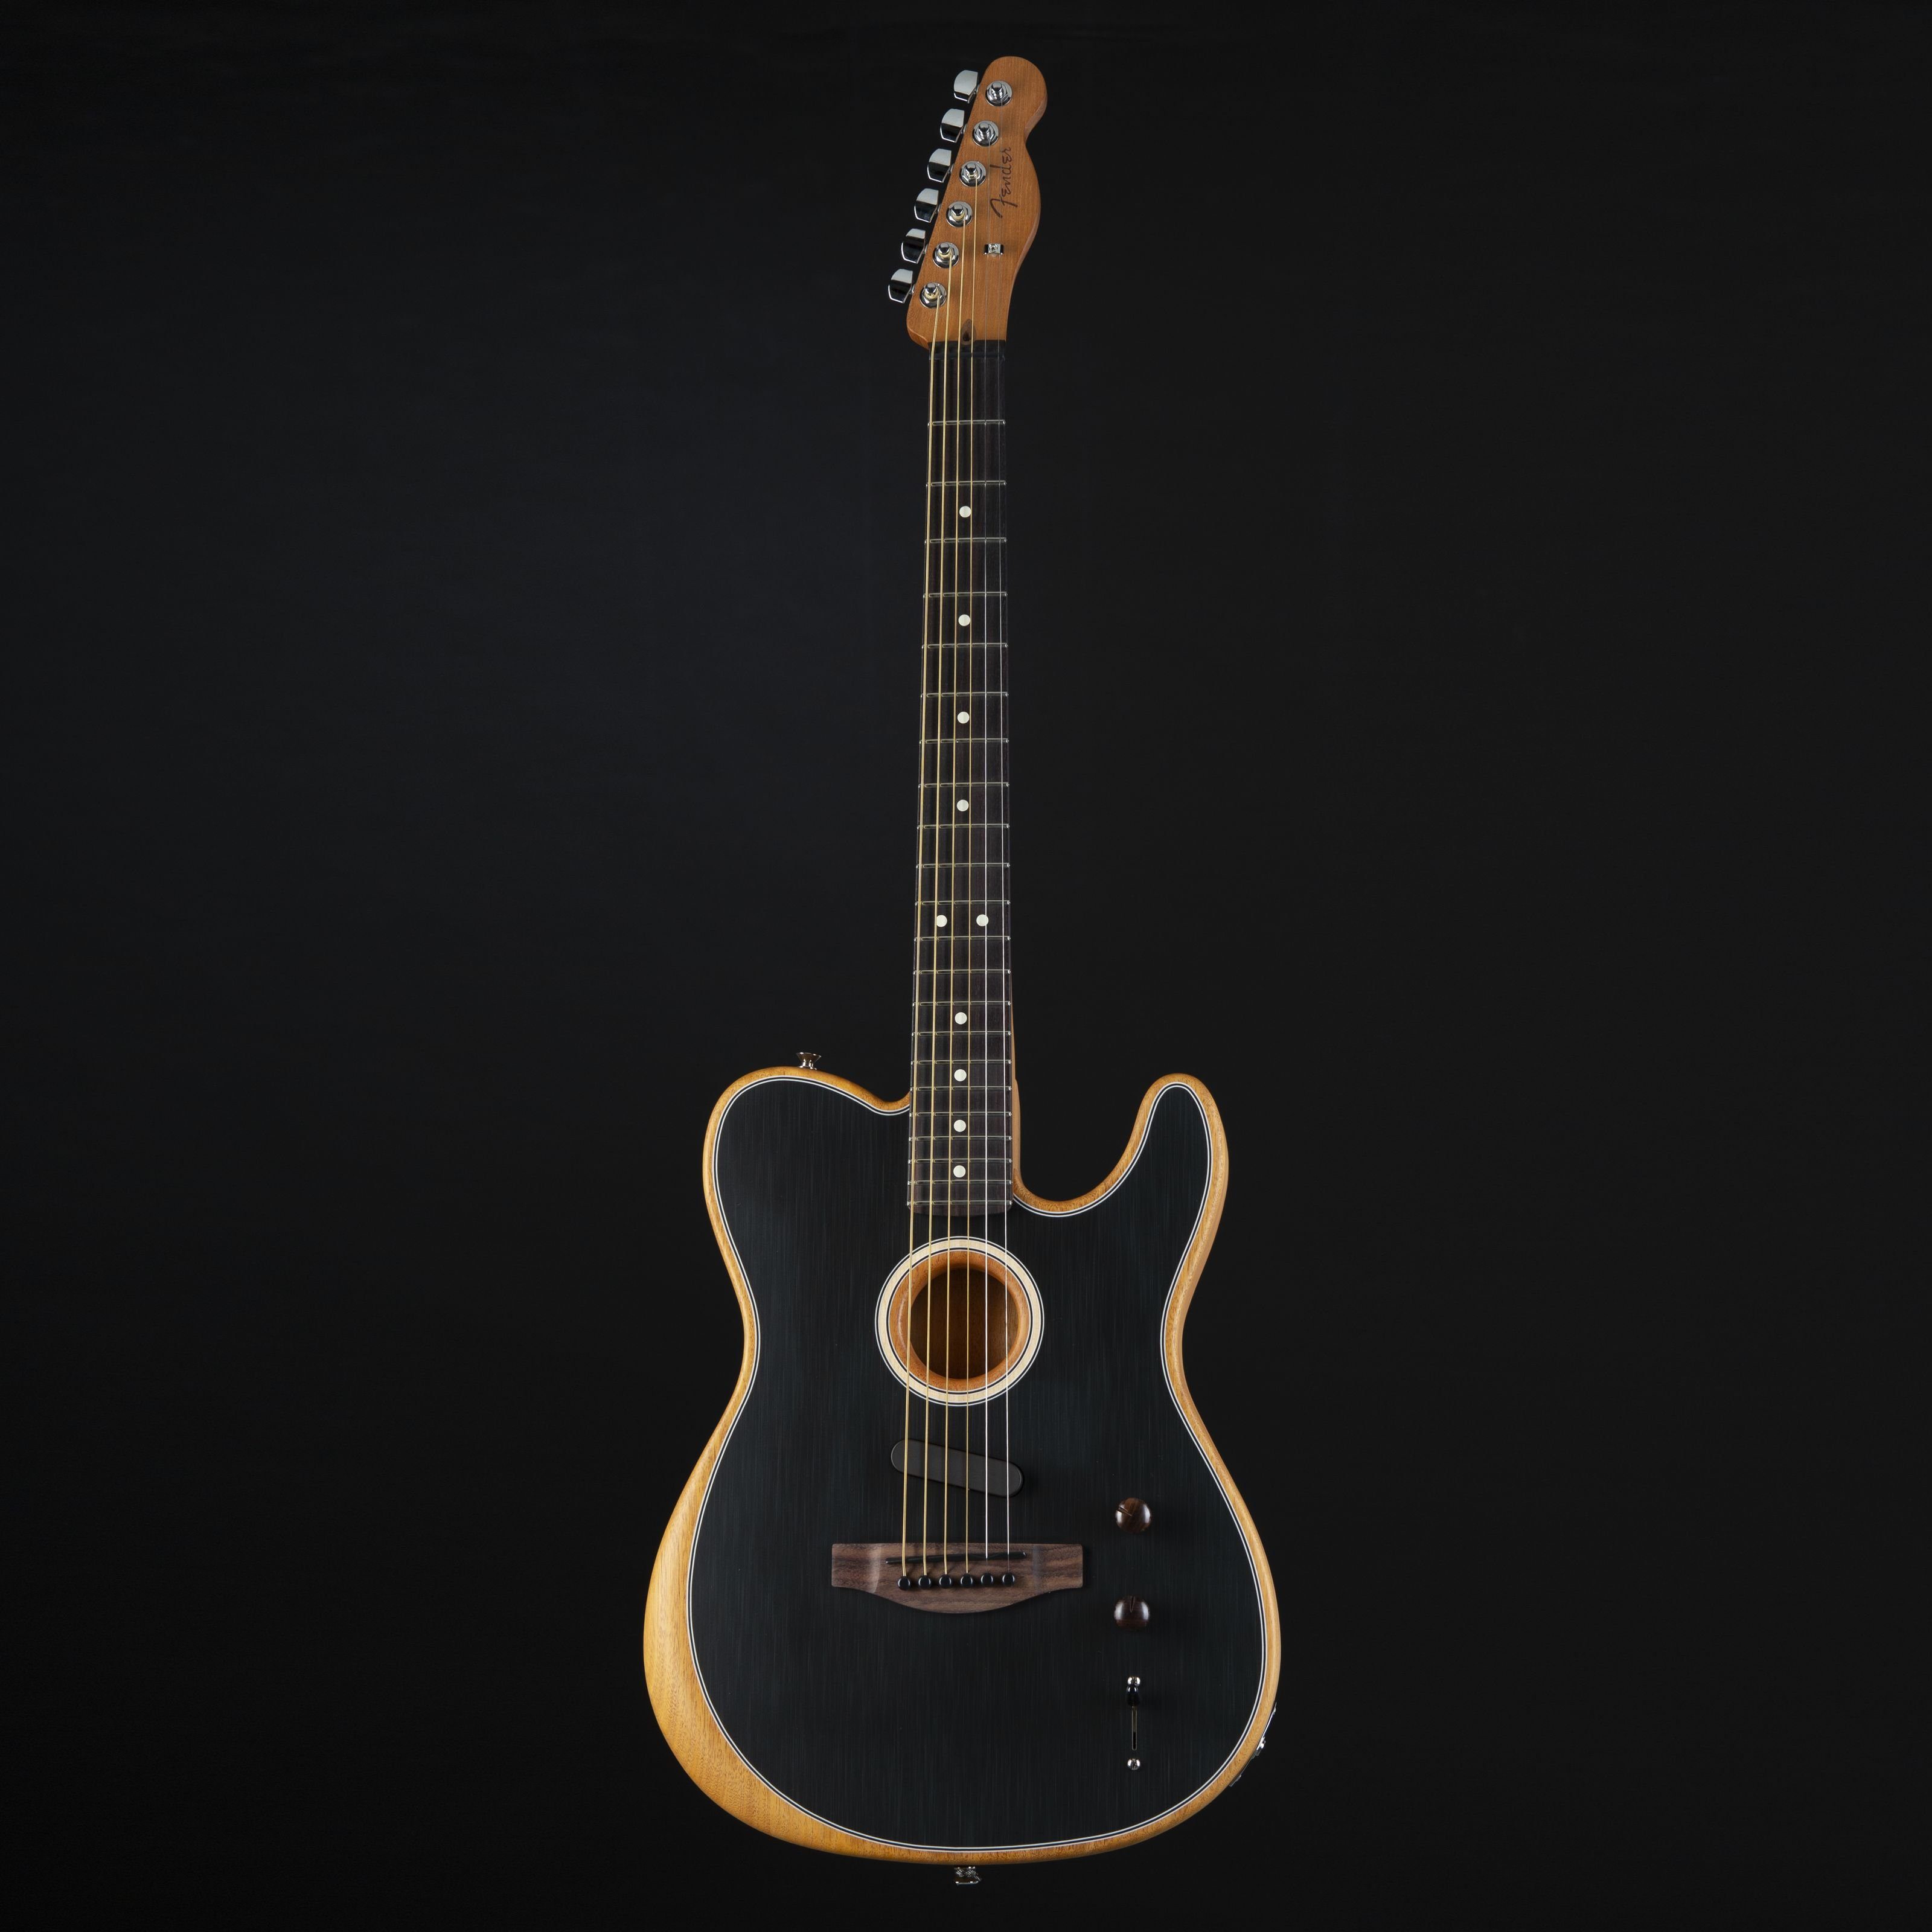 Black Acoustasonic - Westerngitarre Fender Telecaster Player Brushed Spielzeug-Musikinstrument,